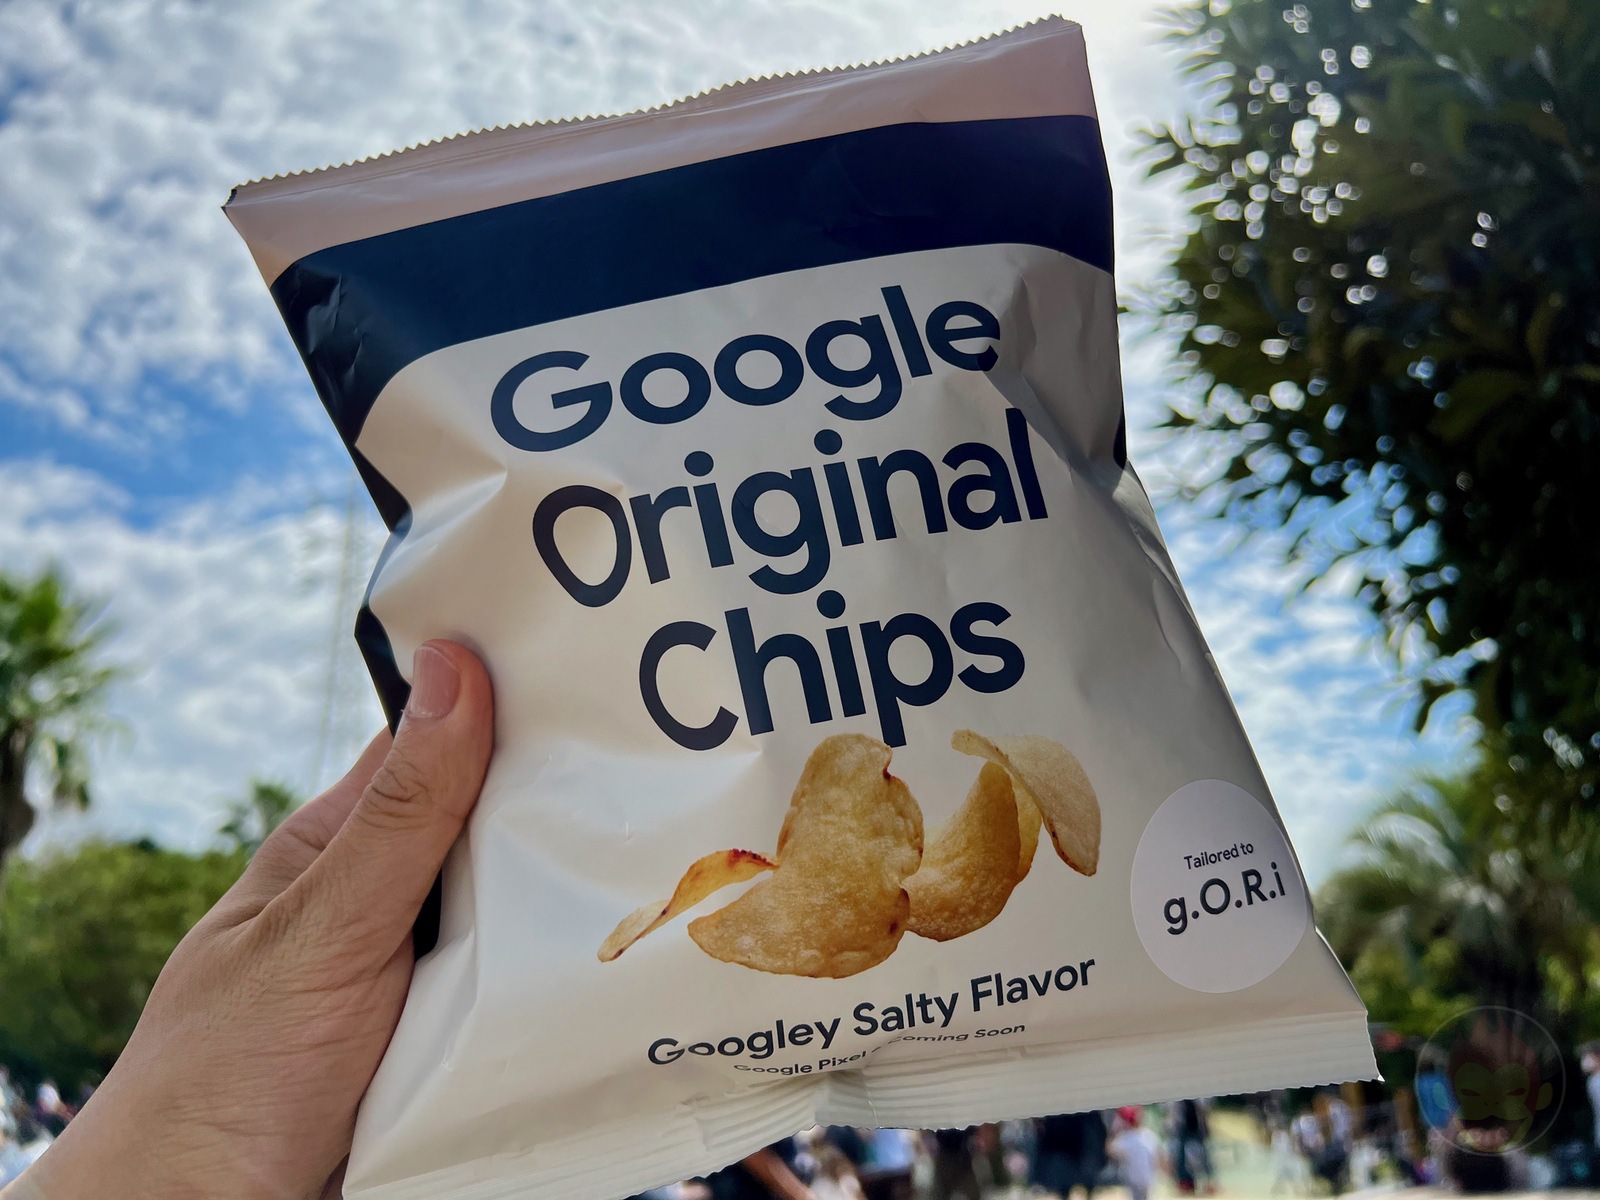 Google-Chips-Googley-Salty-Flavor-08.jpg